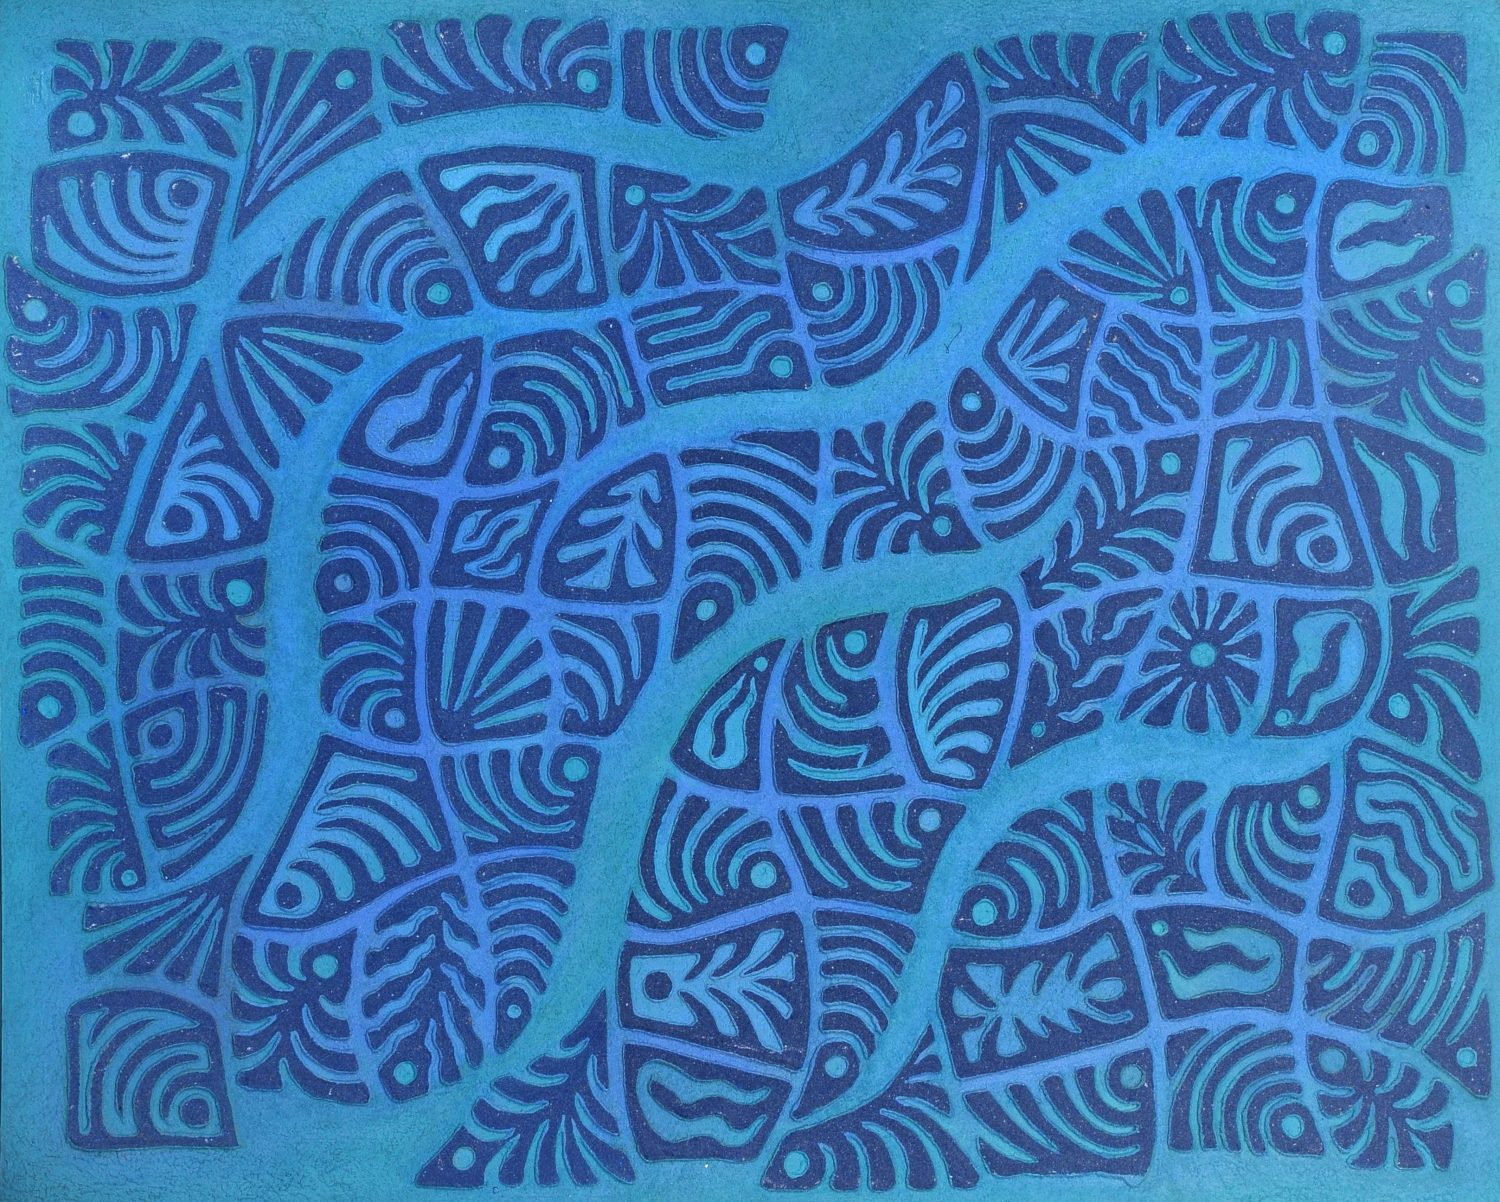 thumbnail of Vegetable sea by Ecuadorian artist Mónica Sarmiento. medium: mixed media on wood. Dimensions: 31.5 x 39 inches. date: 2003